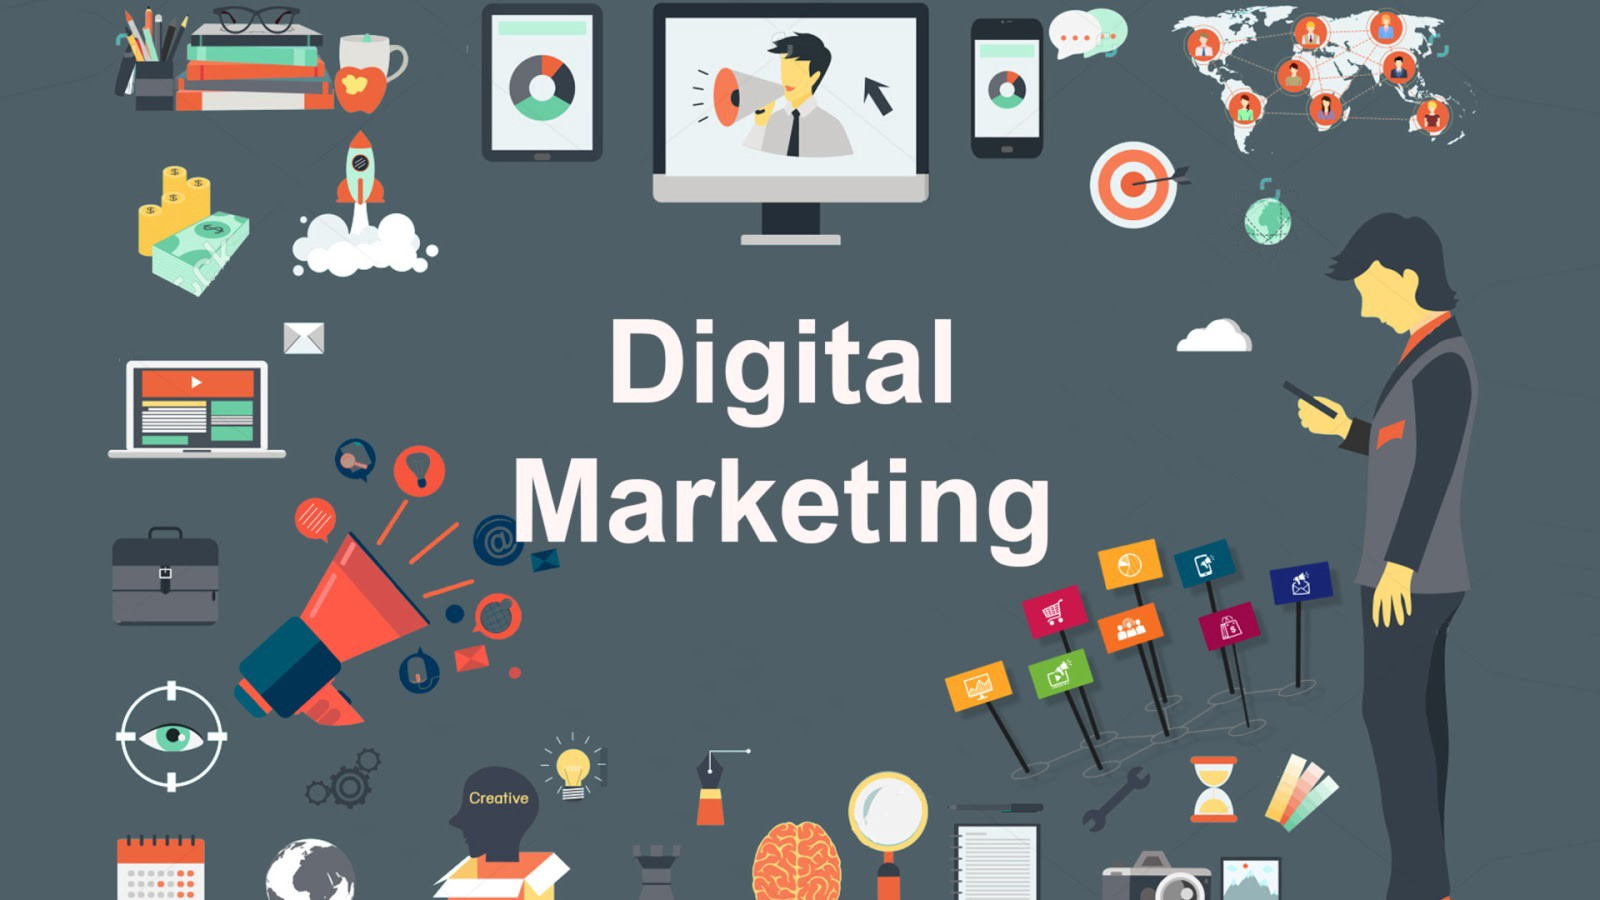 Digital Marketing Company Bangalore